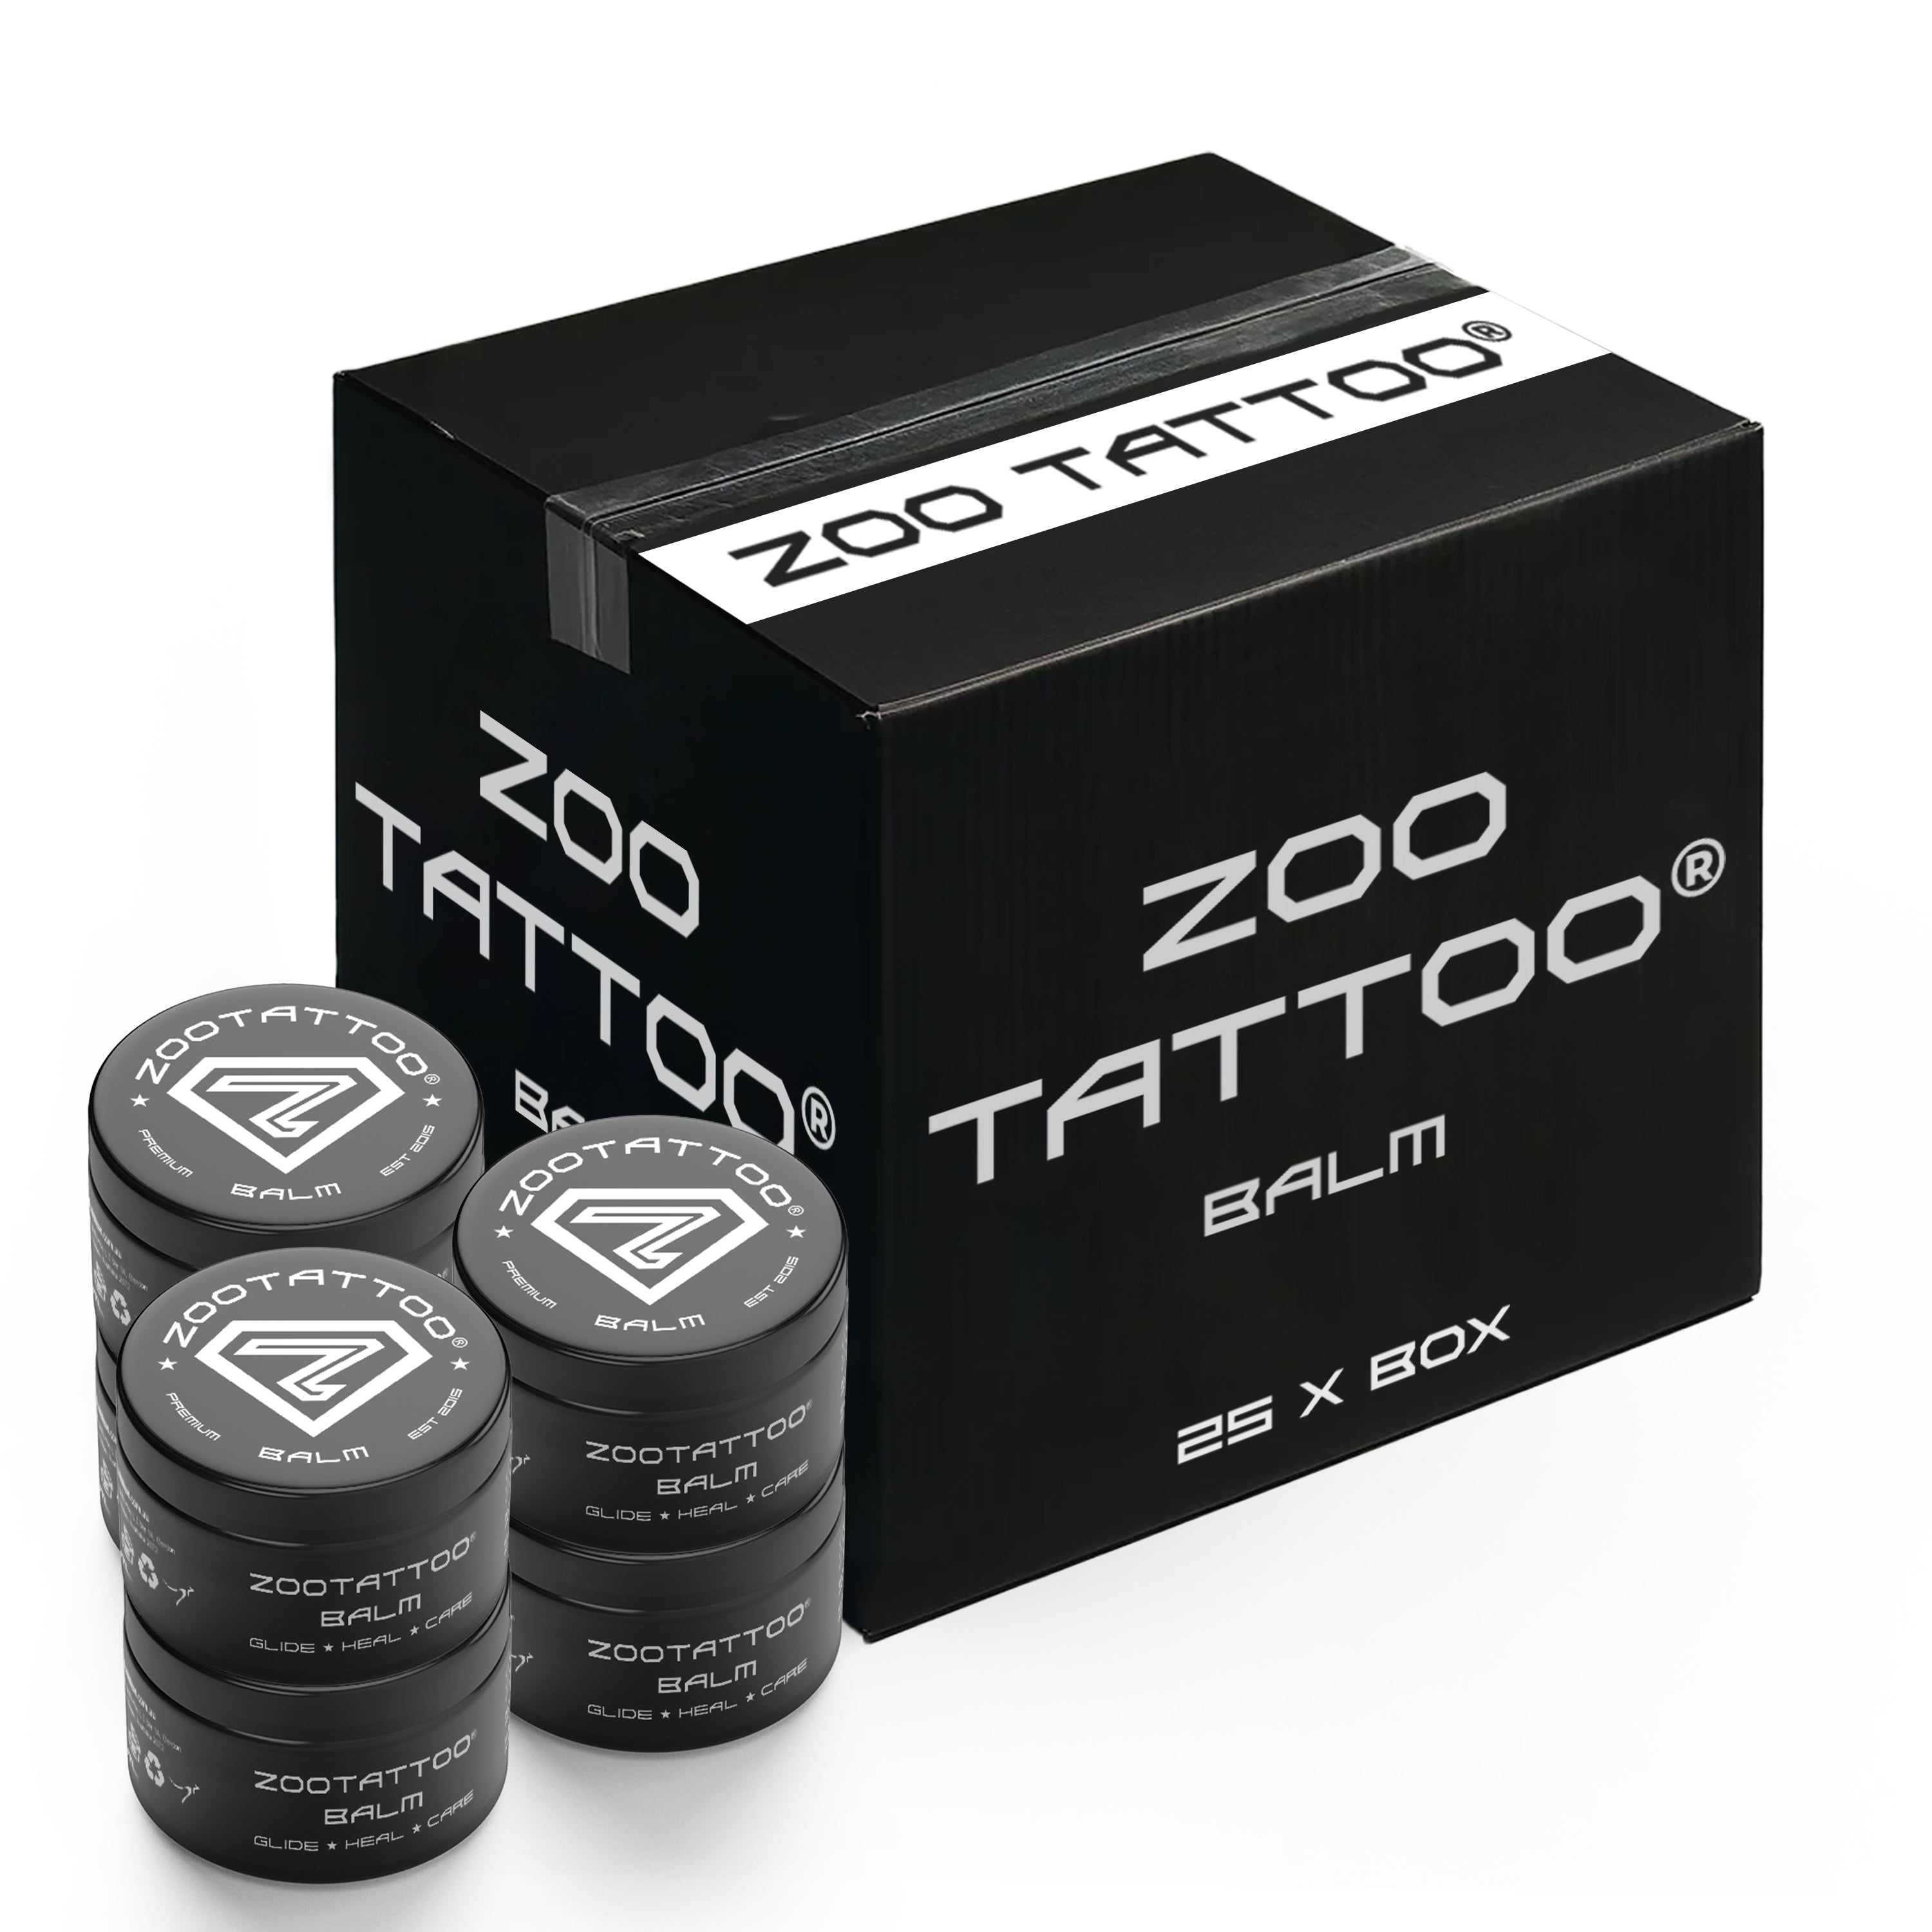 ZOOTATTOO® Balm 150ml Wholesale 25 Box